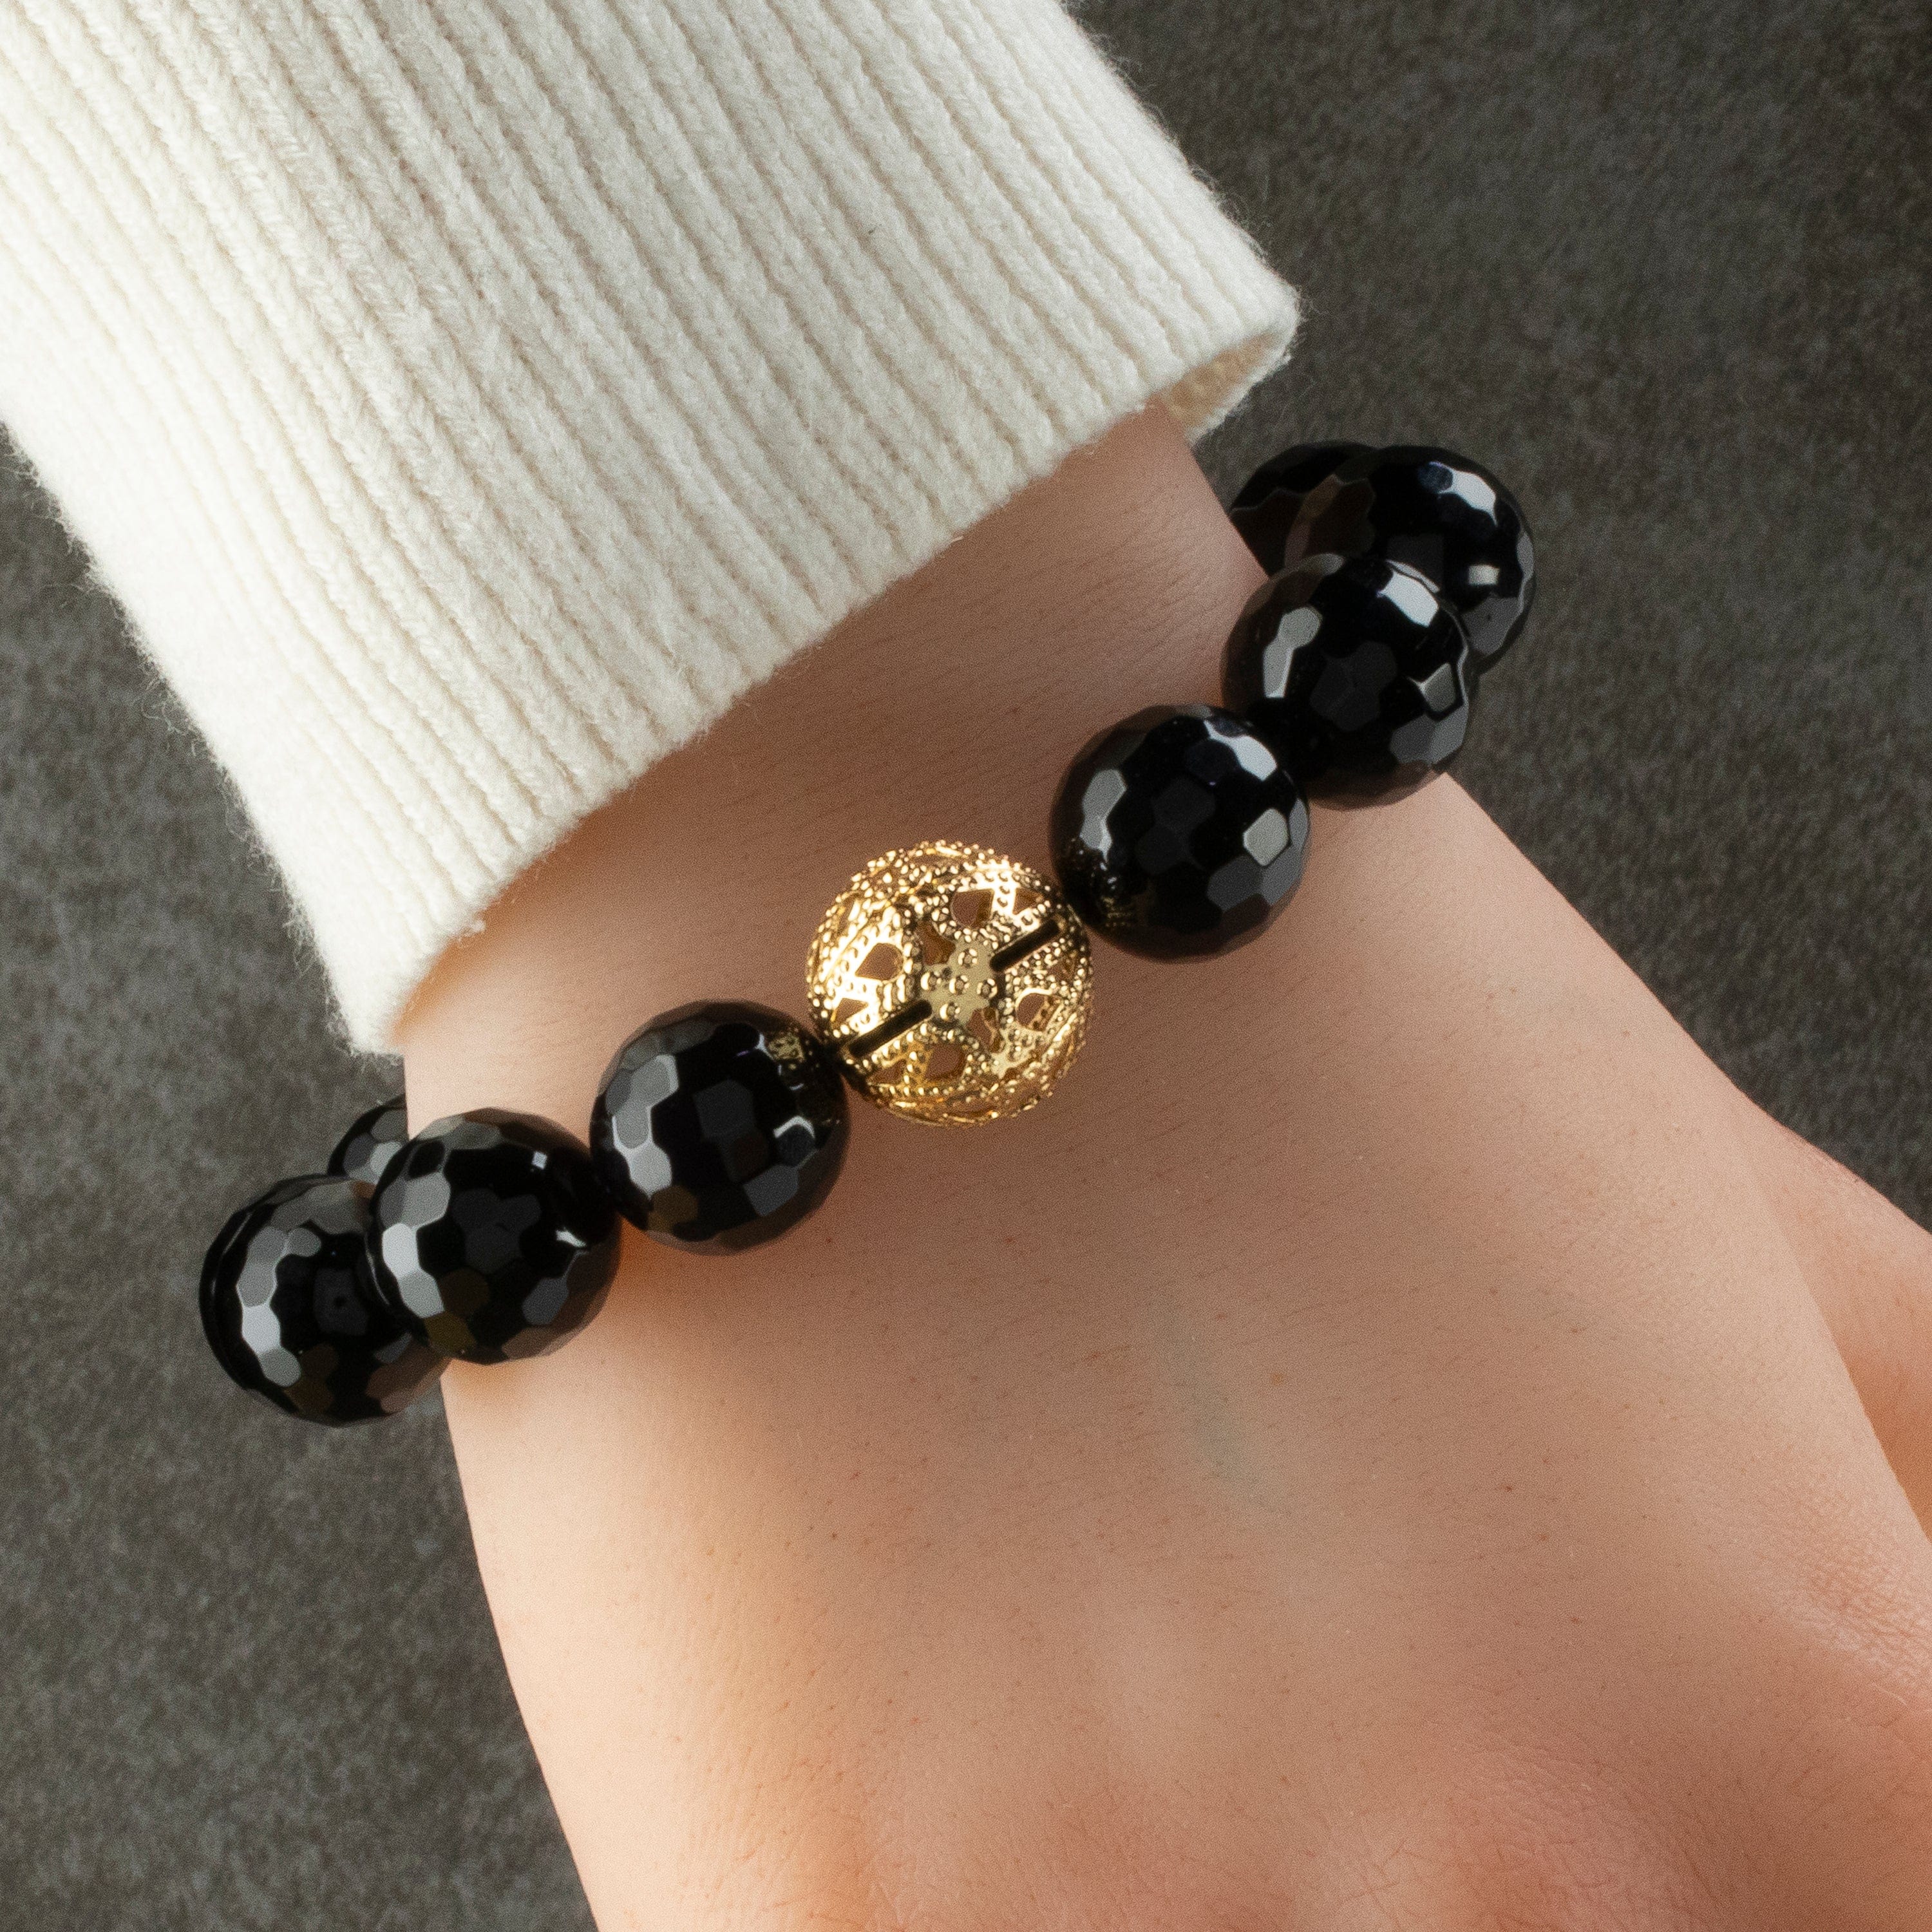 Kalifano Gemstone Bracelets Faceted Black Agate 14mm Gemstone Bead Elastic Bracelet with Gold Accent Bead GOLD-BGP-075